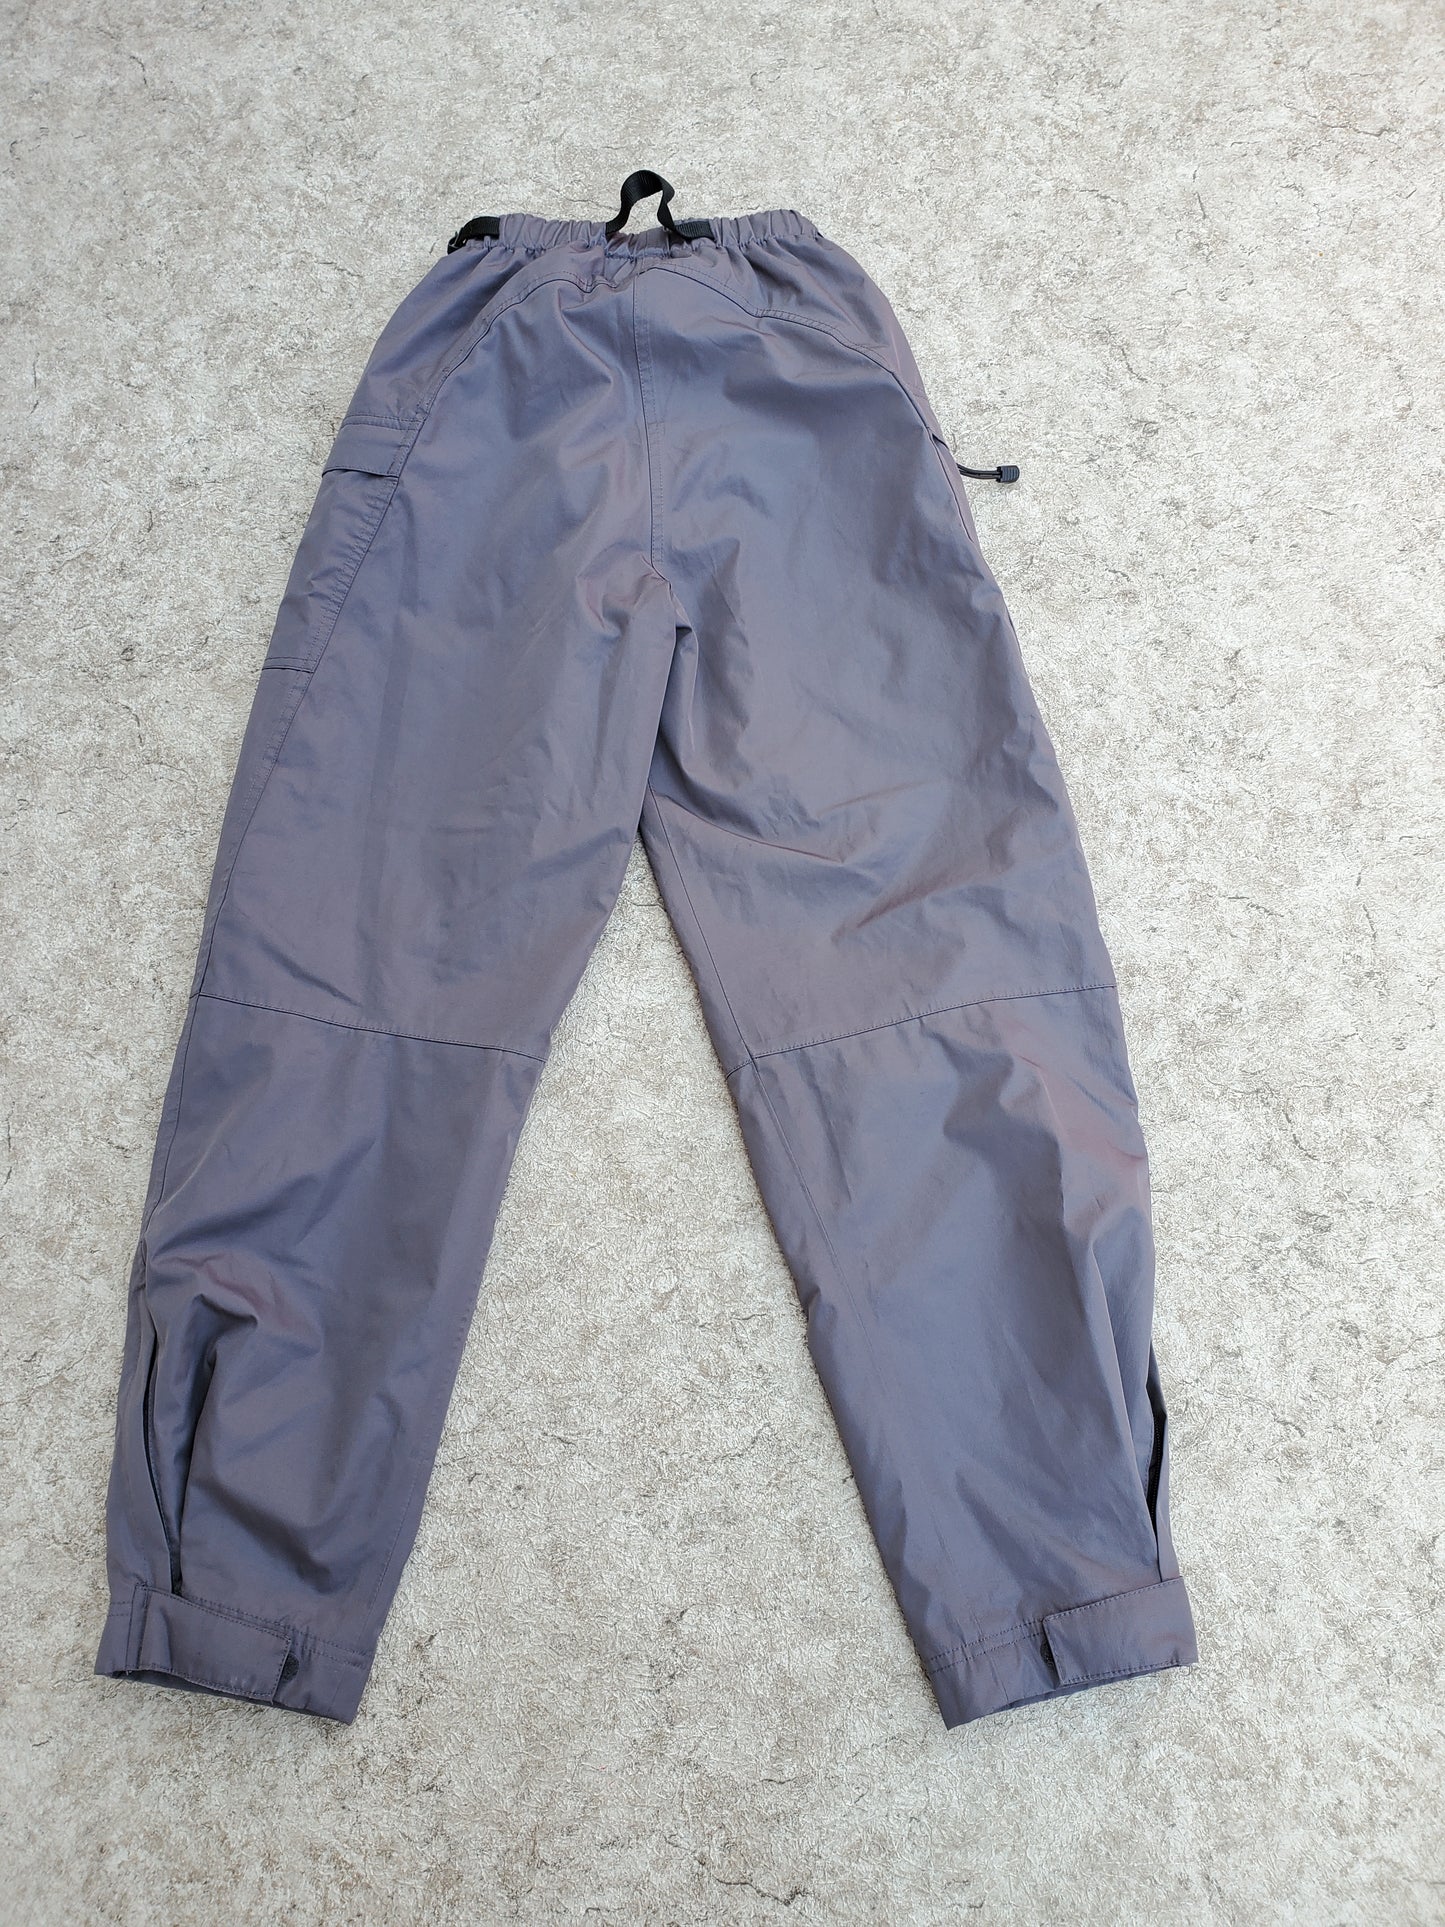 Rain Pants Ladies Size Medium Wetskins Grey New Demo Model